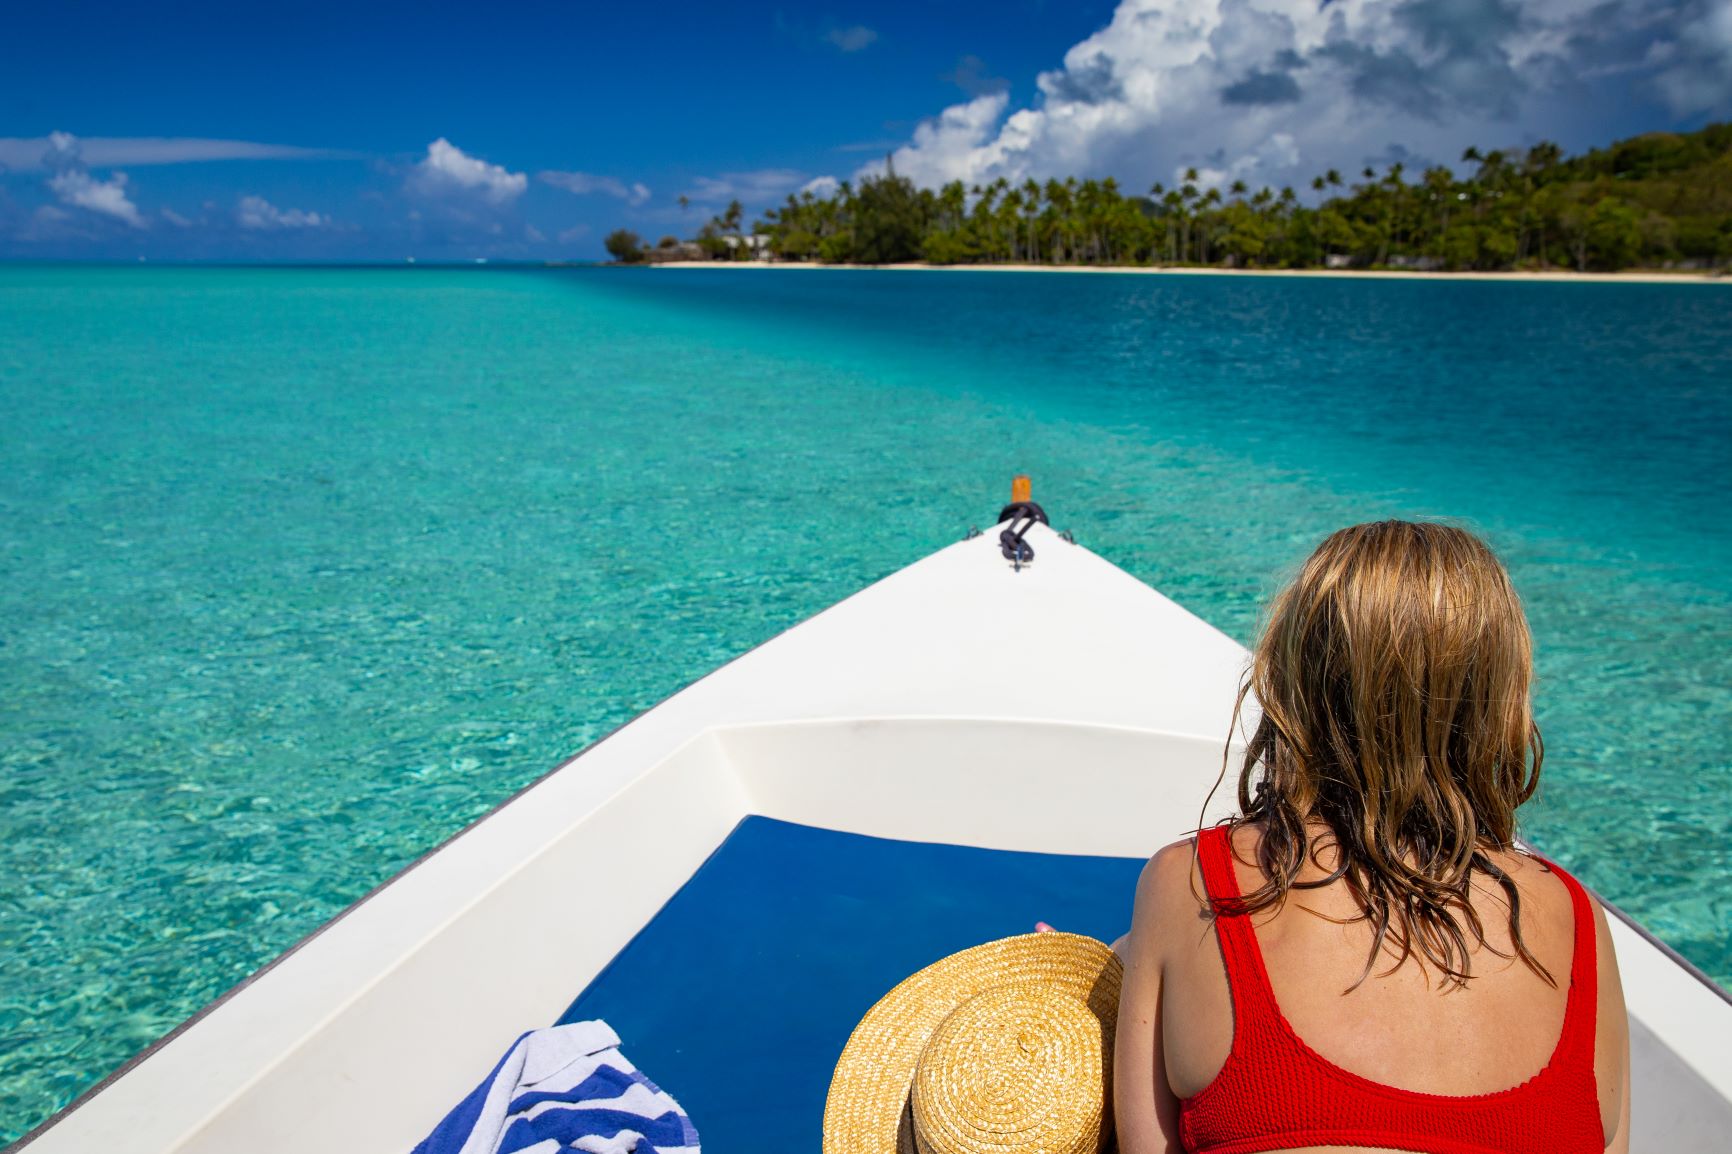 Amelia lying on a boat in Bora Bora